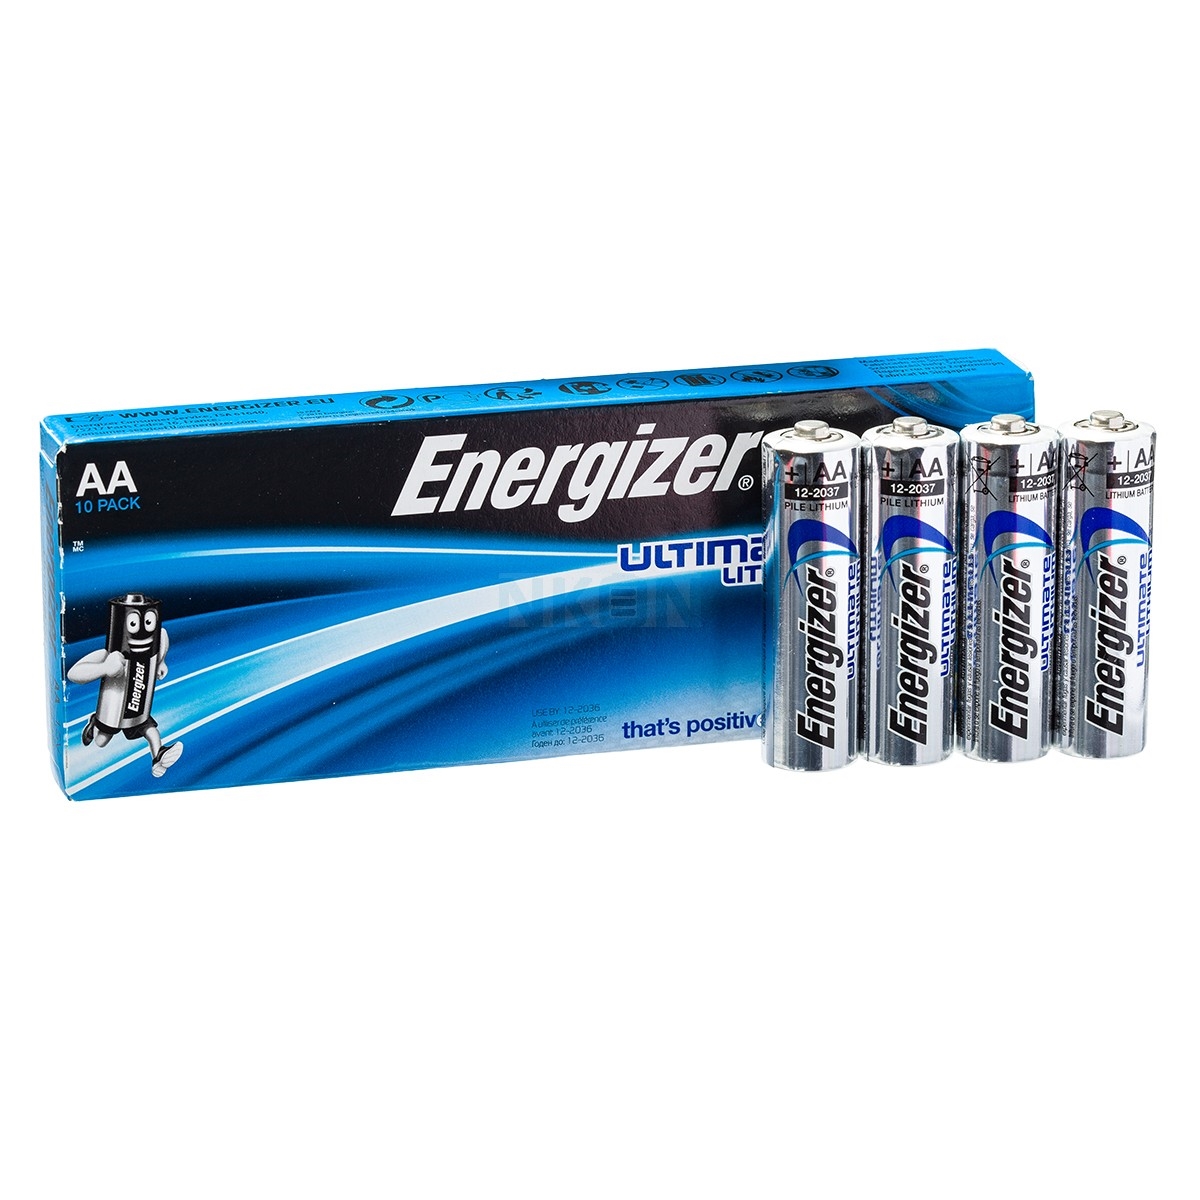 korrelat Smag Bekræfte Energizer AA lithium batteri10 stk. pakning